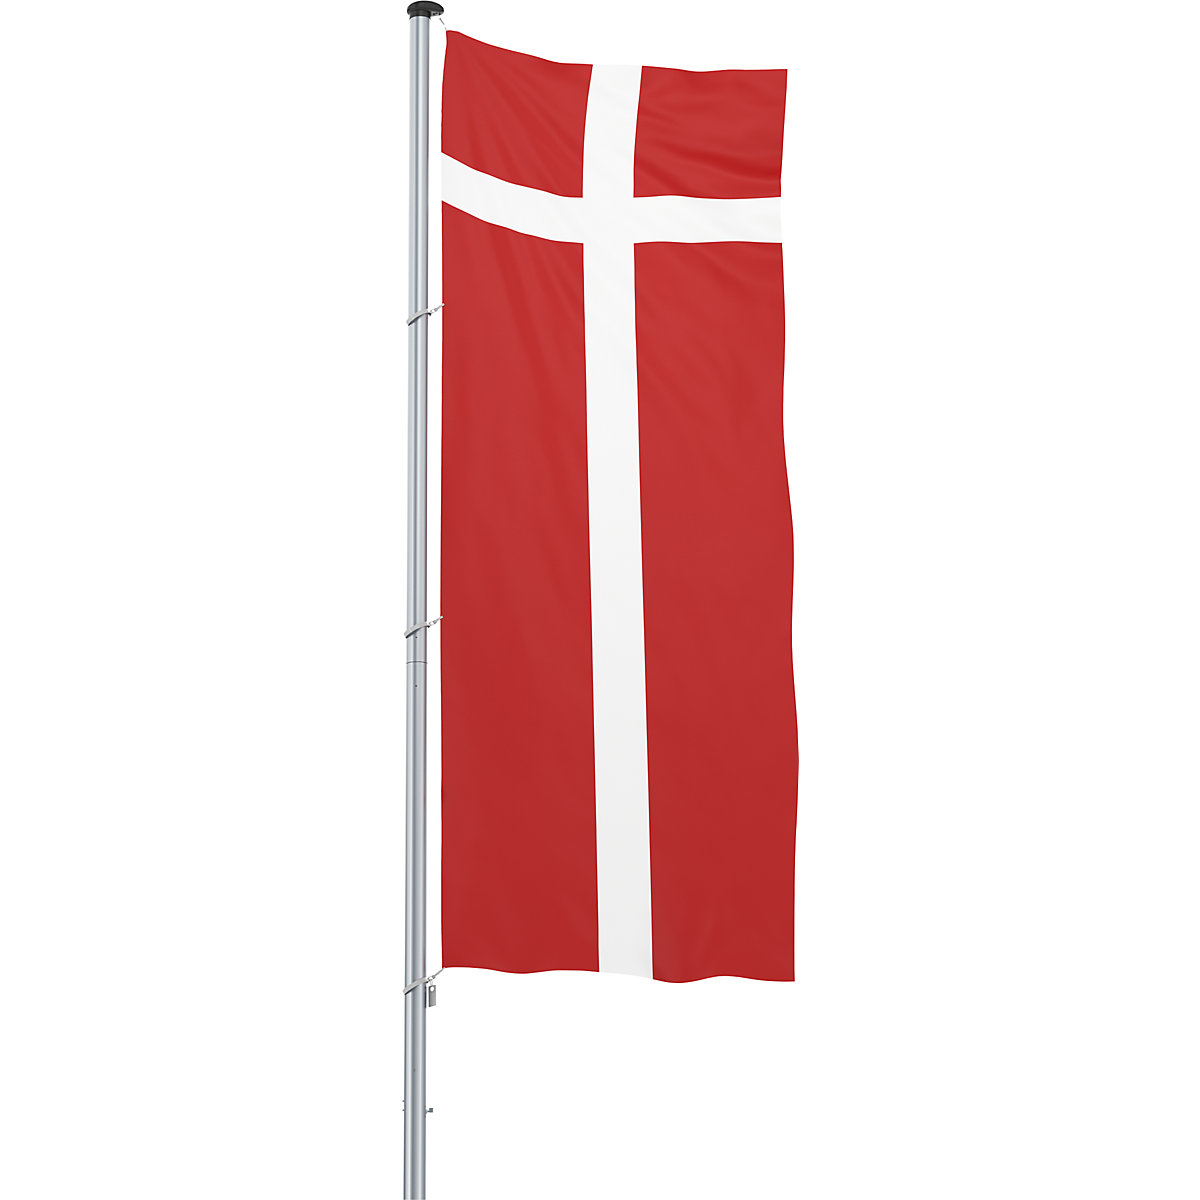 Zastava/nacionalna zastava – Mannus, format 1,2 x 3 m, Danska